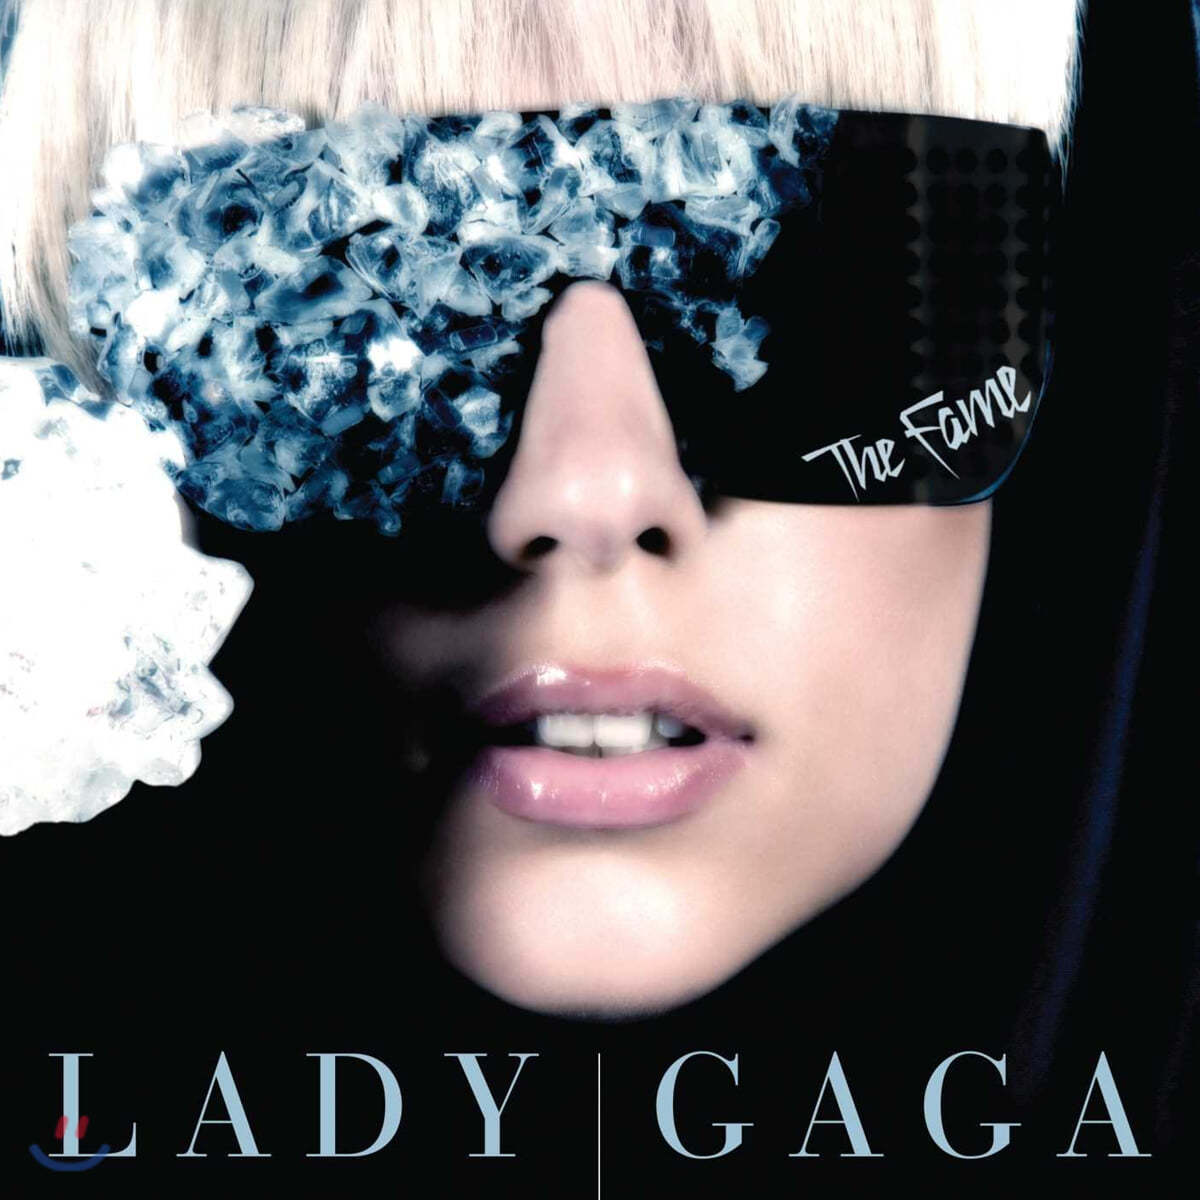 Lady Gaga (레이디 가가) - 1집 The Fame [블루 컬러 2LP]